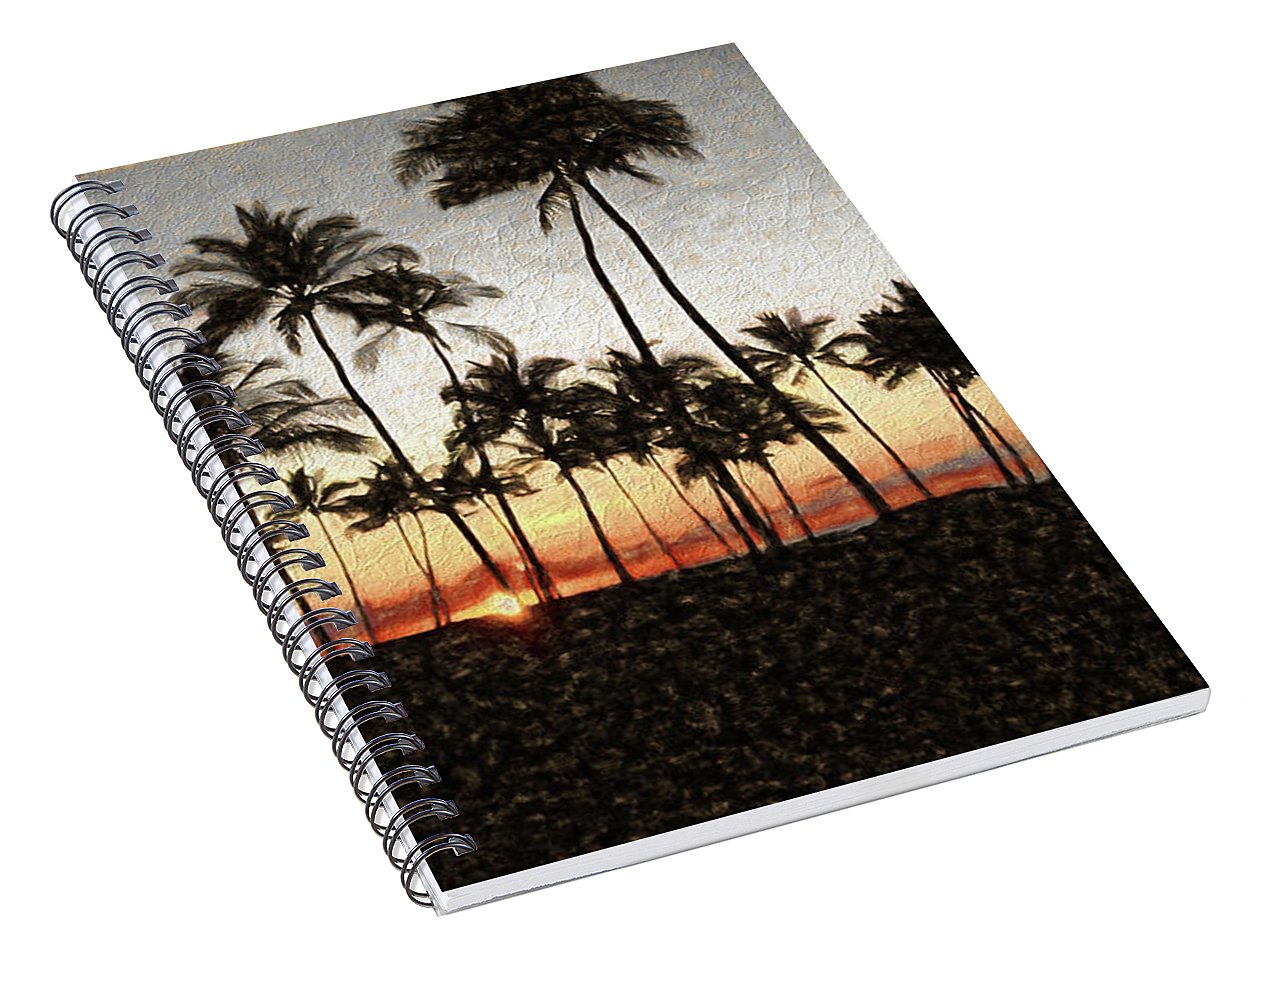 Hawaiian Sunset Rock Painting - Spiral Notebook